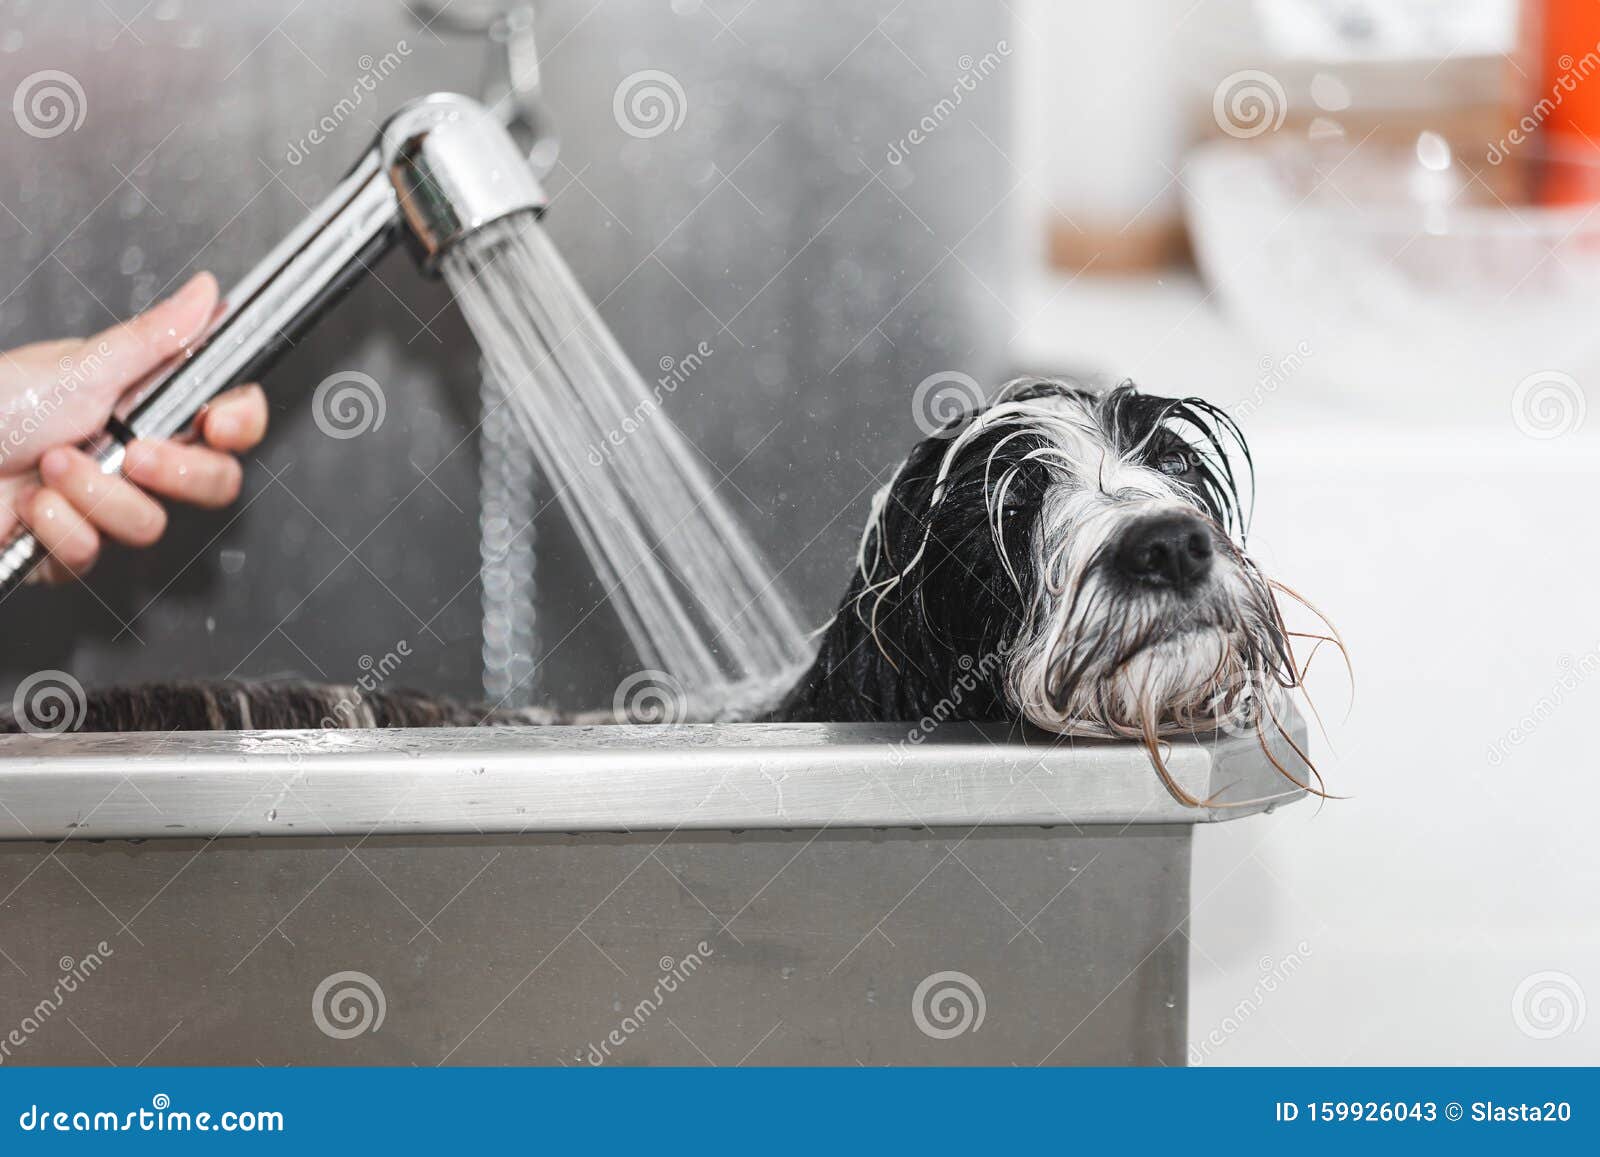 tibetan terrier dog getting washed at dog wash